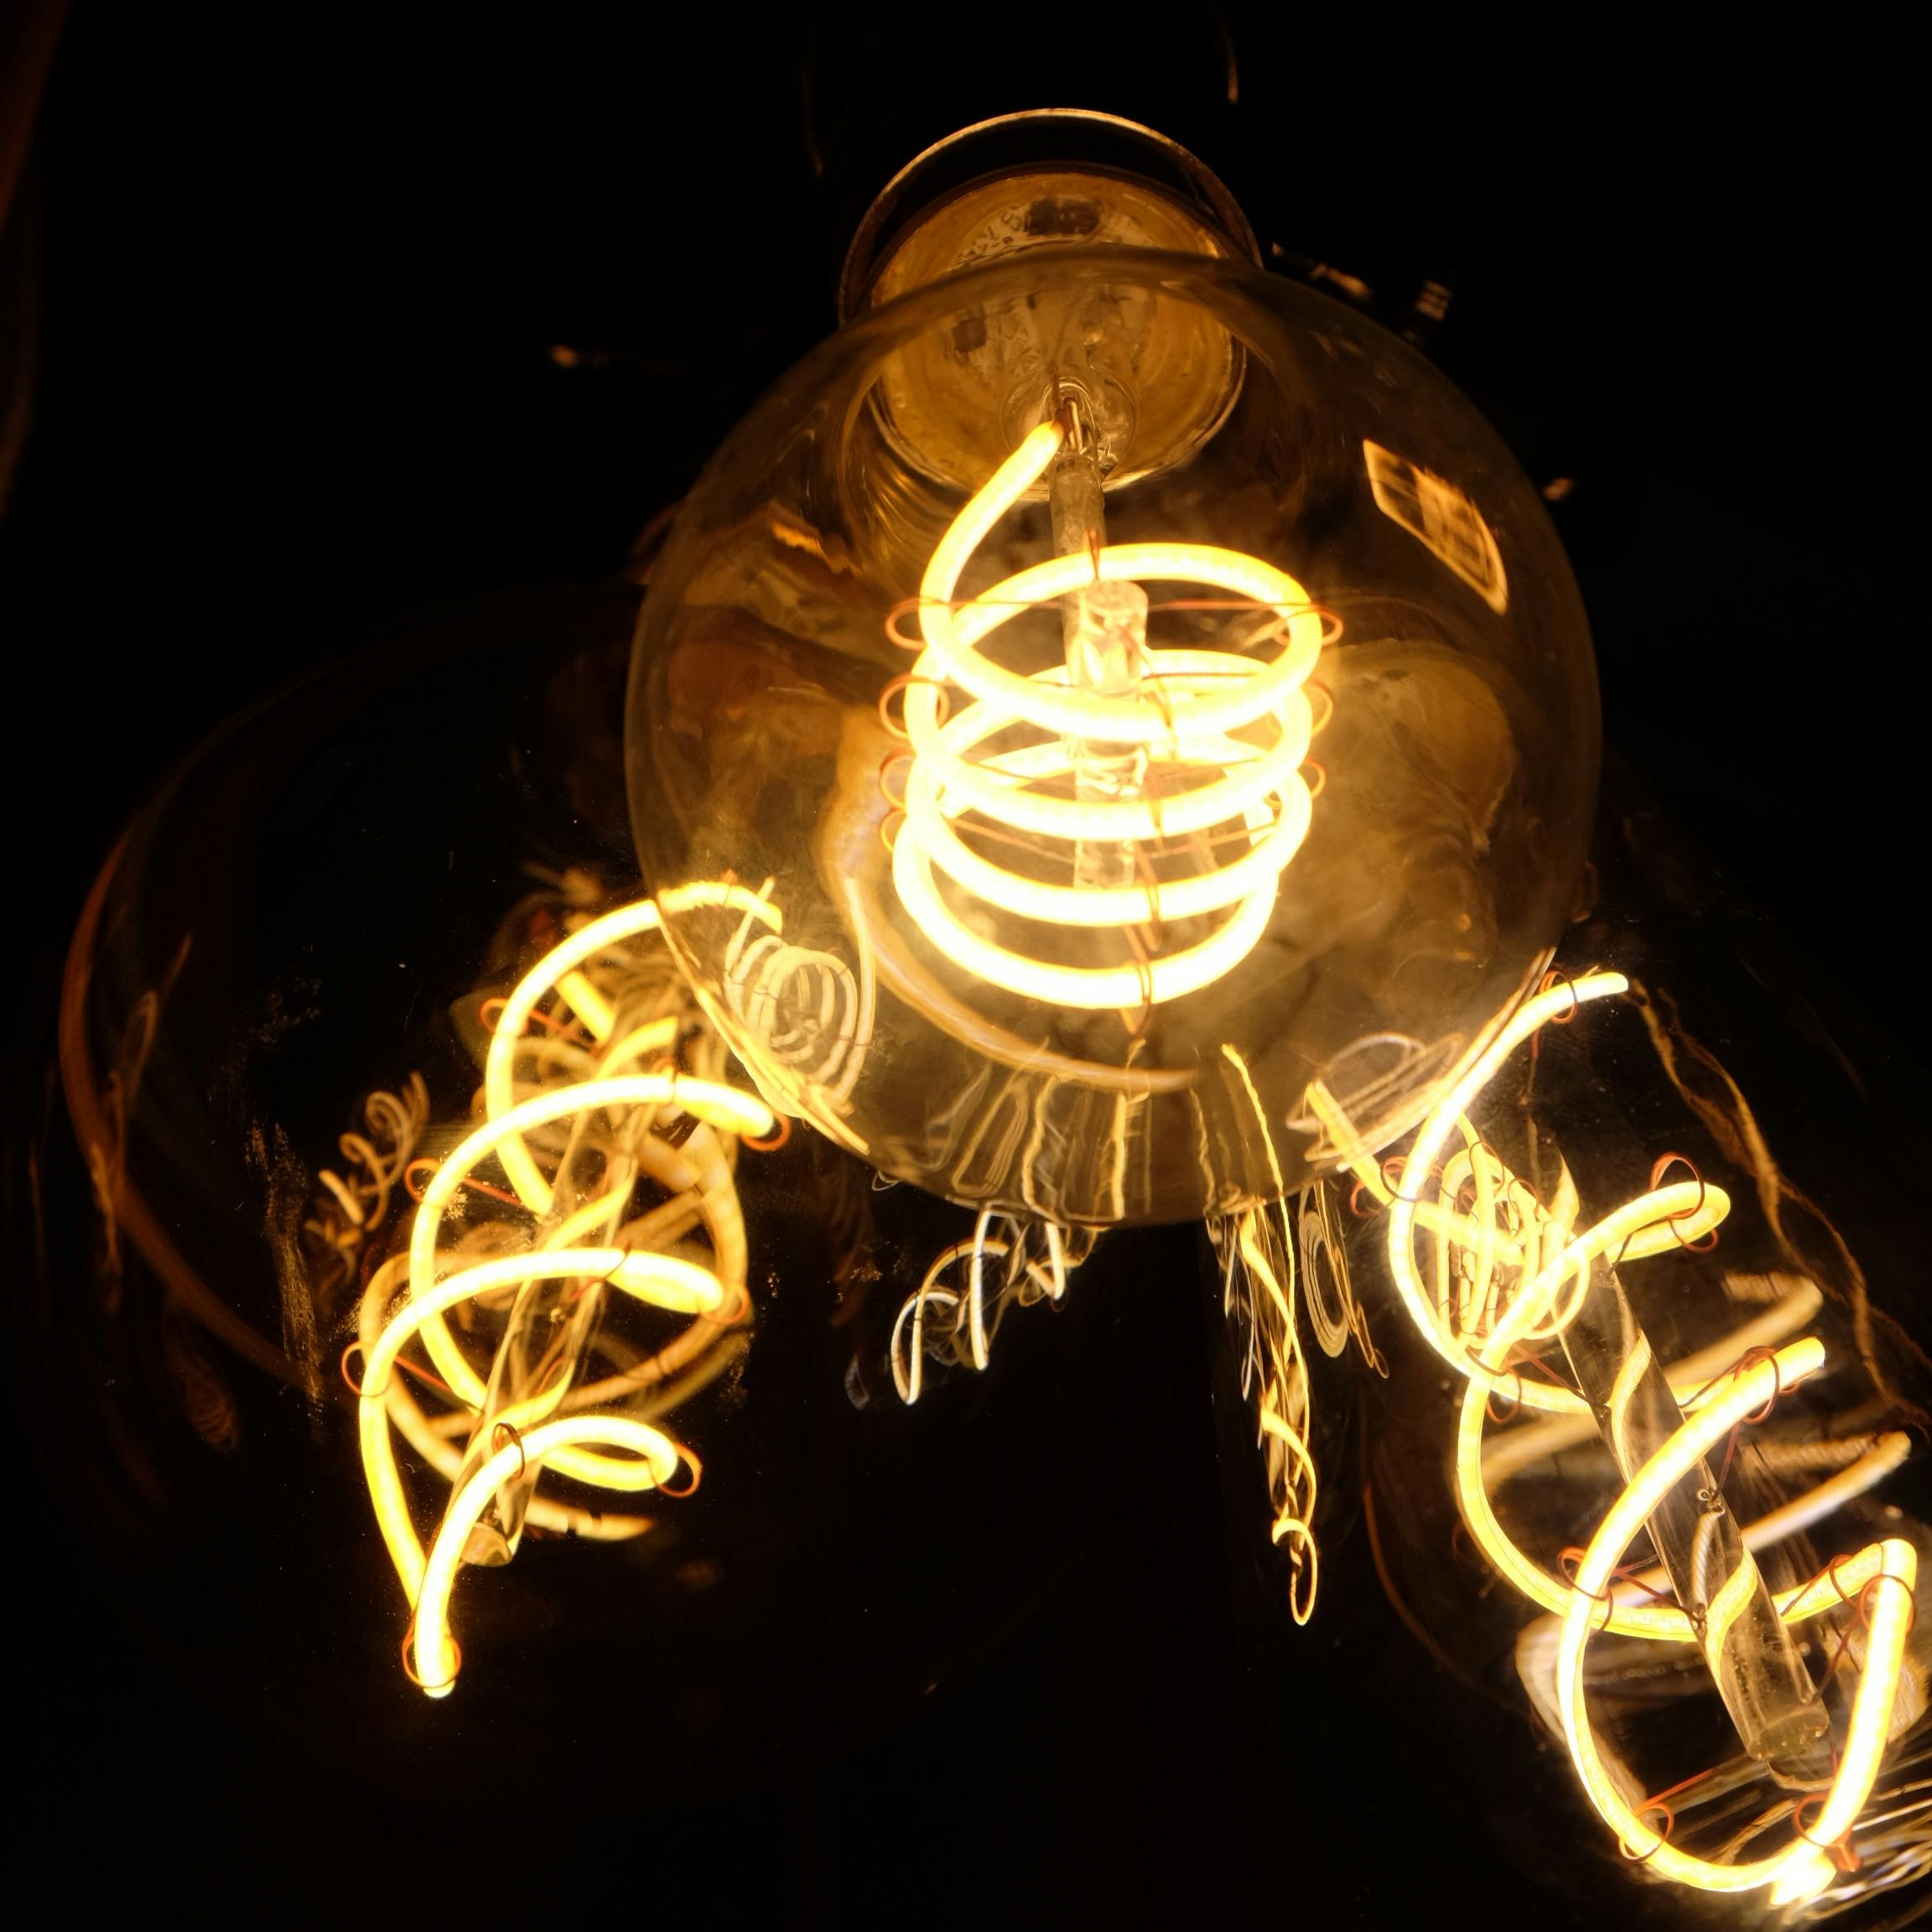 Free stock photo of Vintage filament LED light bulbs